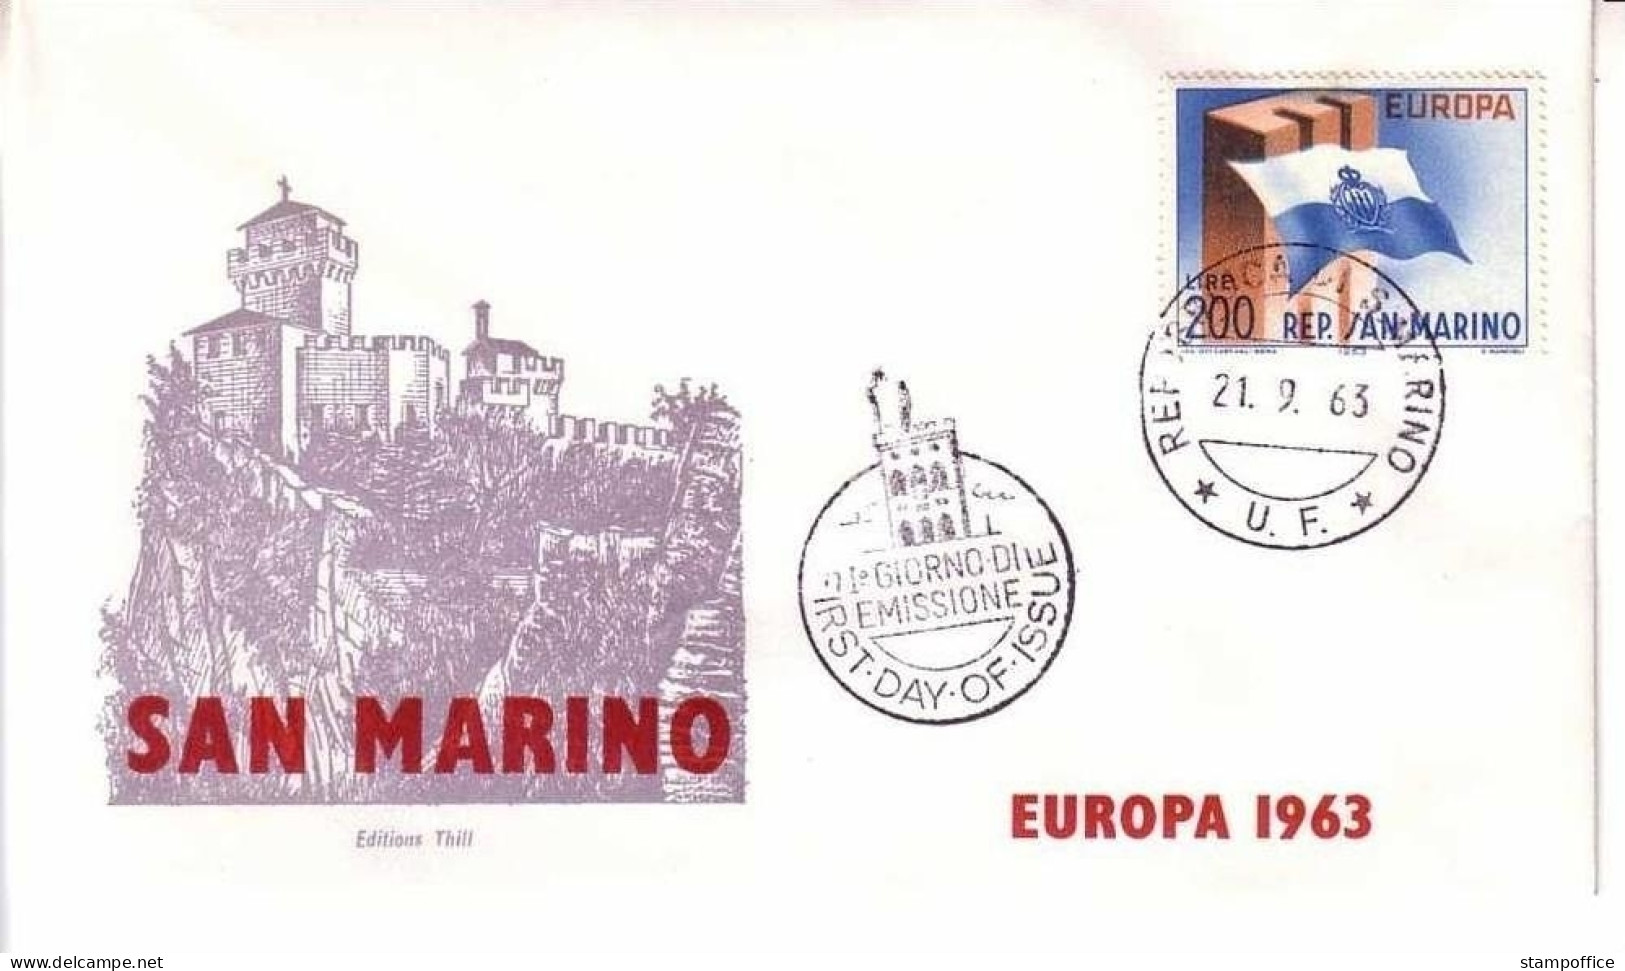 SAN MARINO MI-NR. 781 FDC CEPT 1963 - FDC